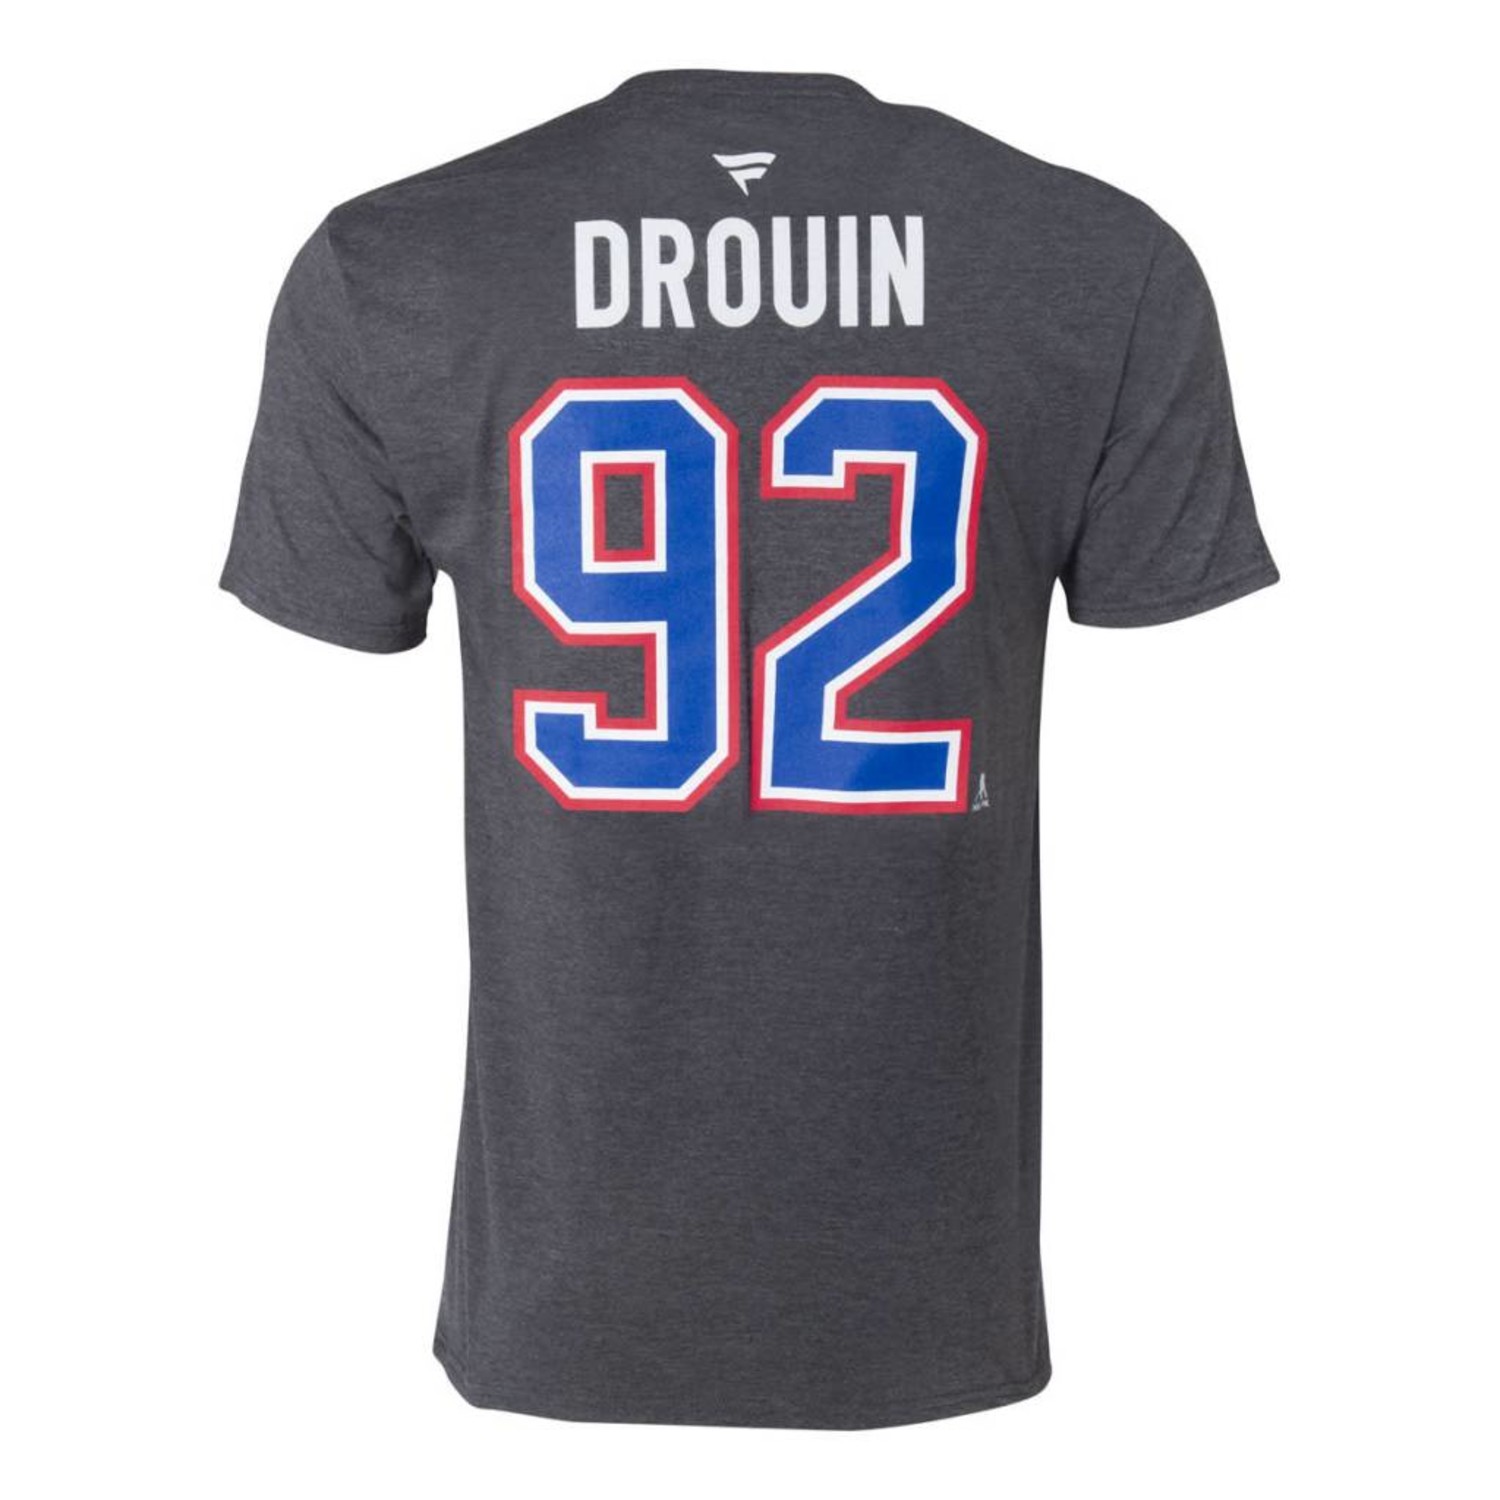 Jonathan Drouin #92 Player T-Shirt 